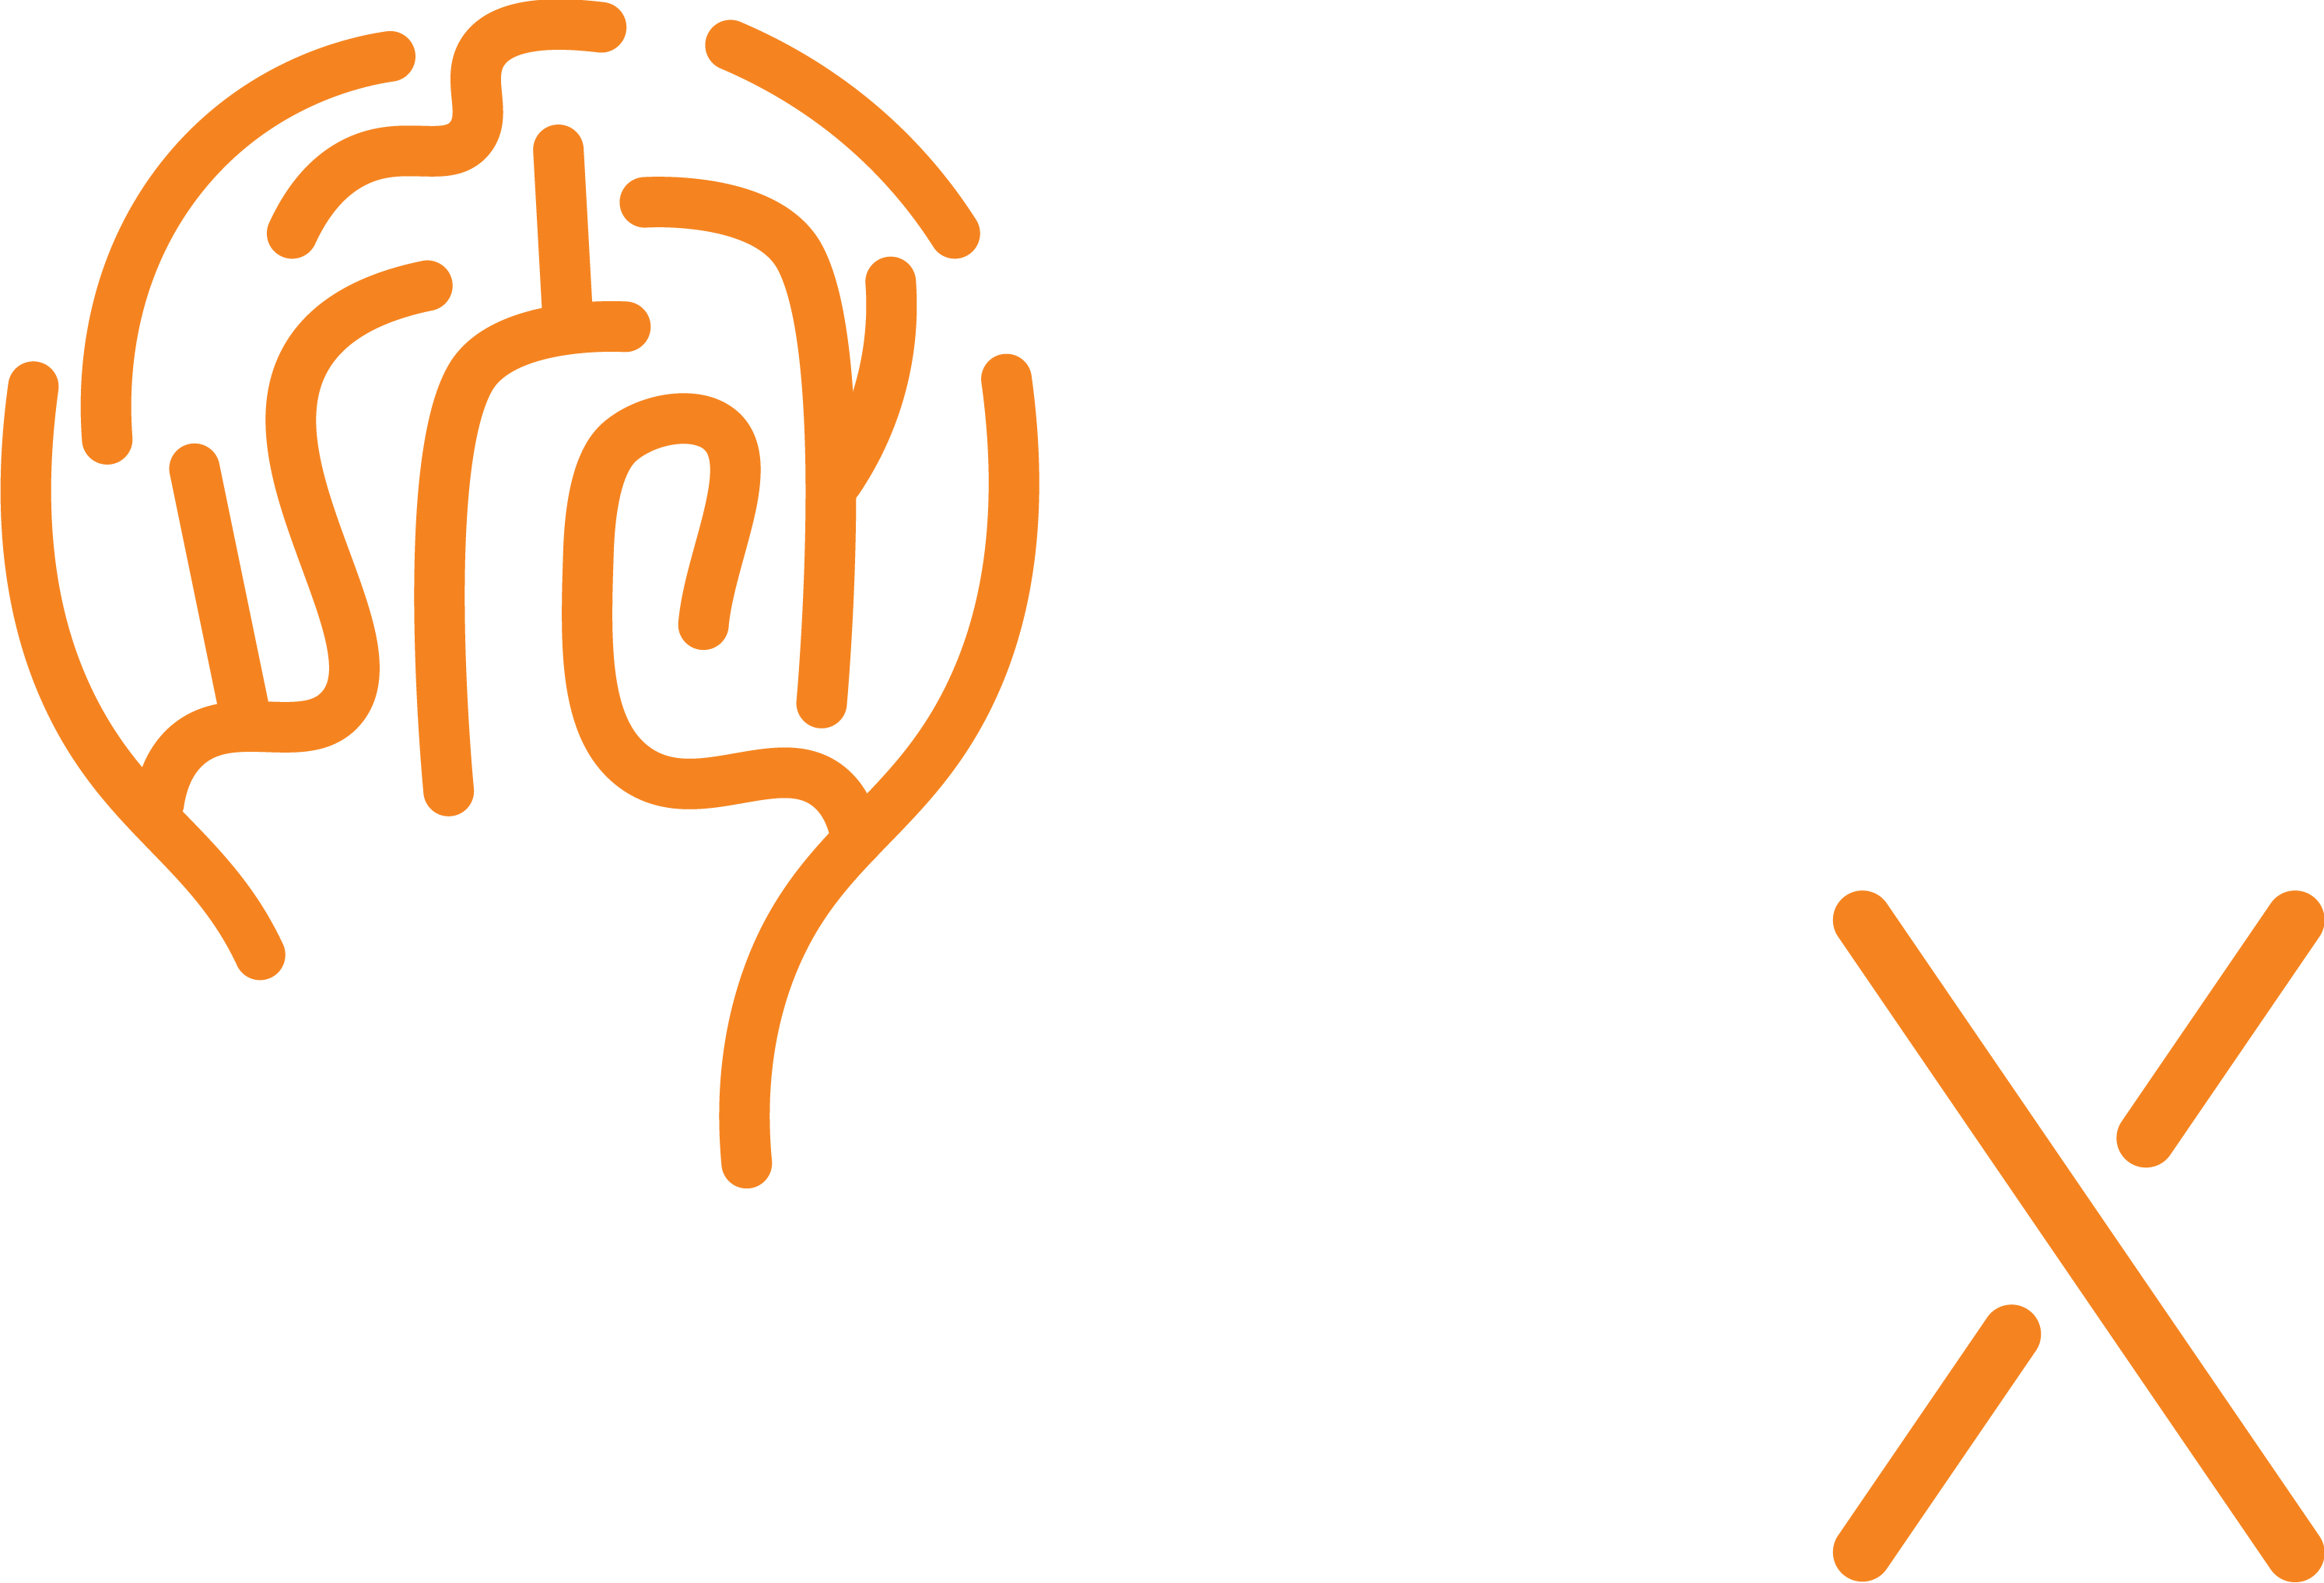 GenX